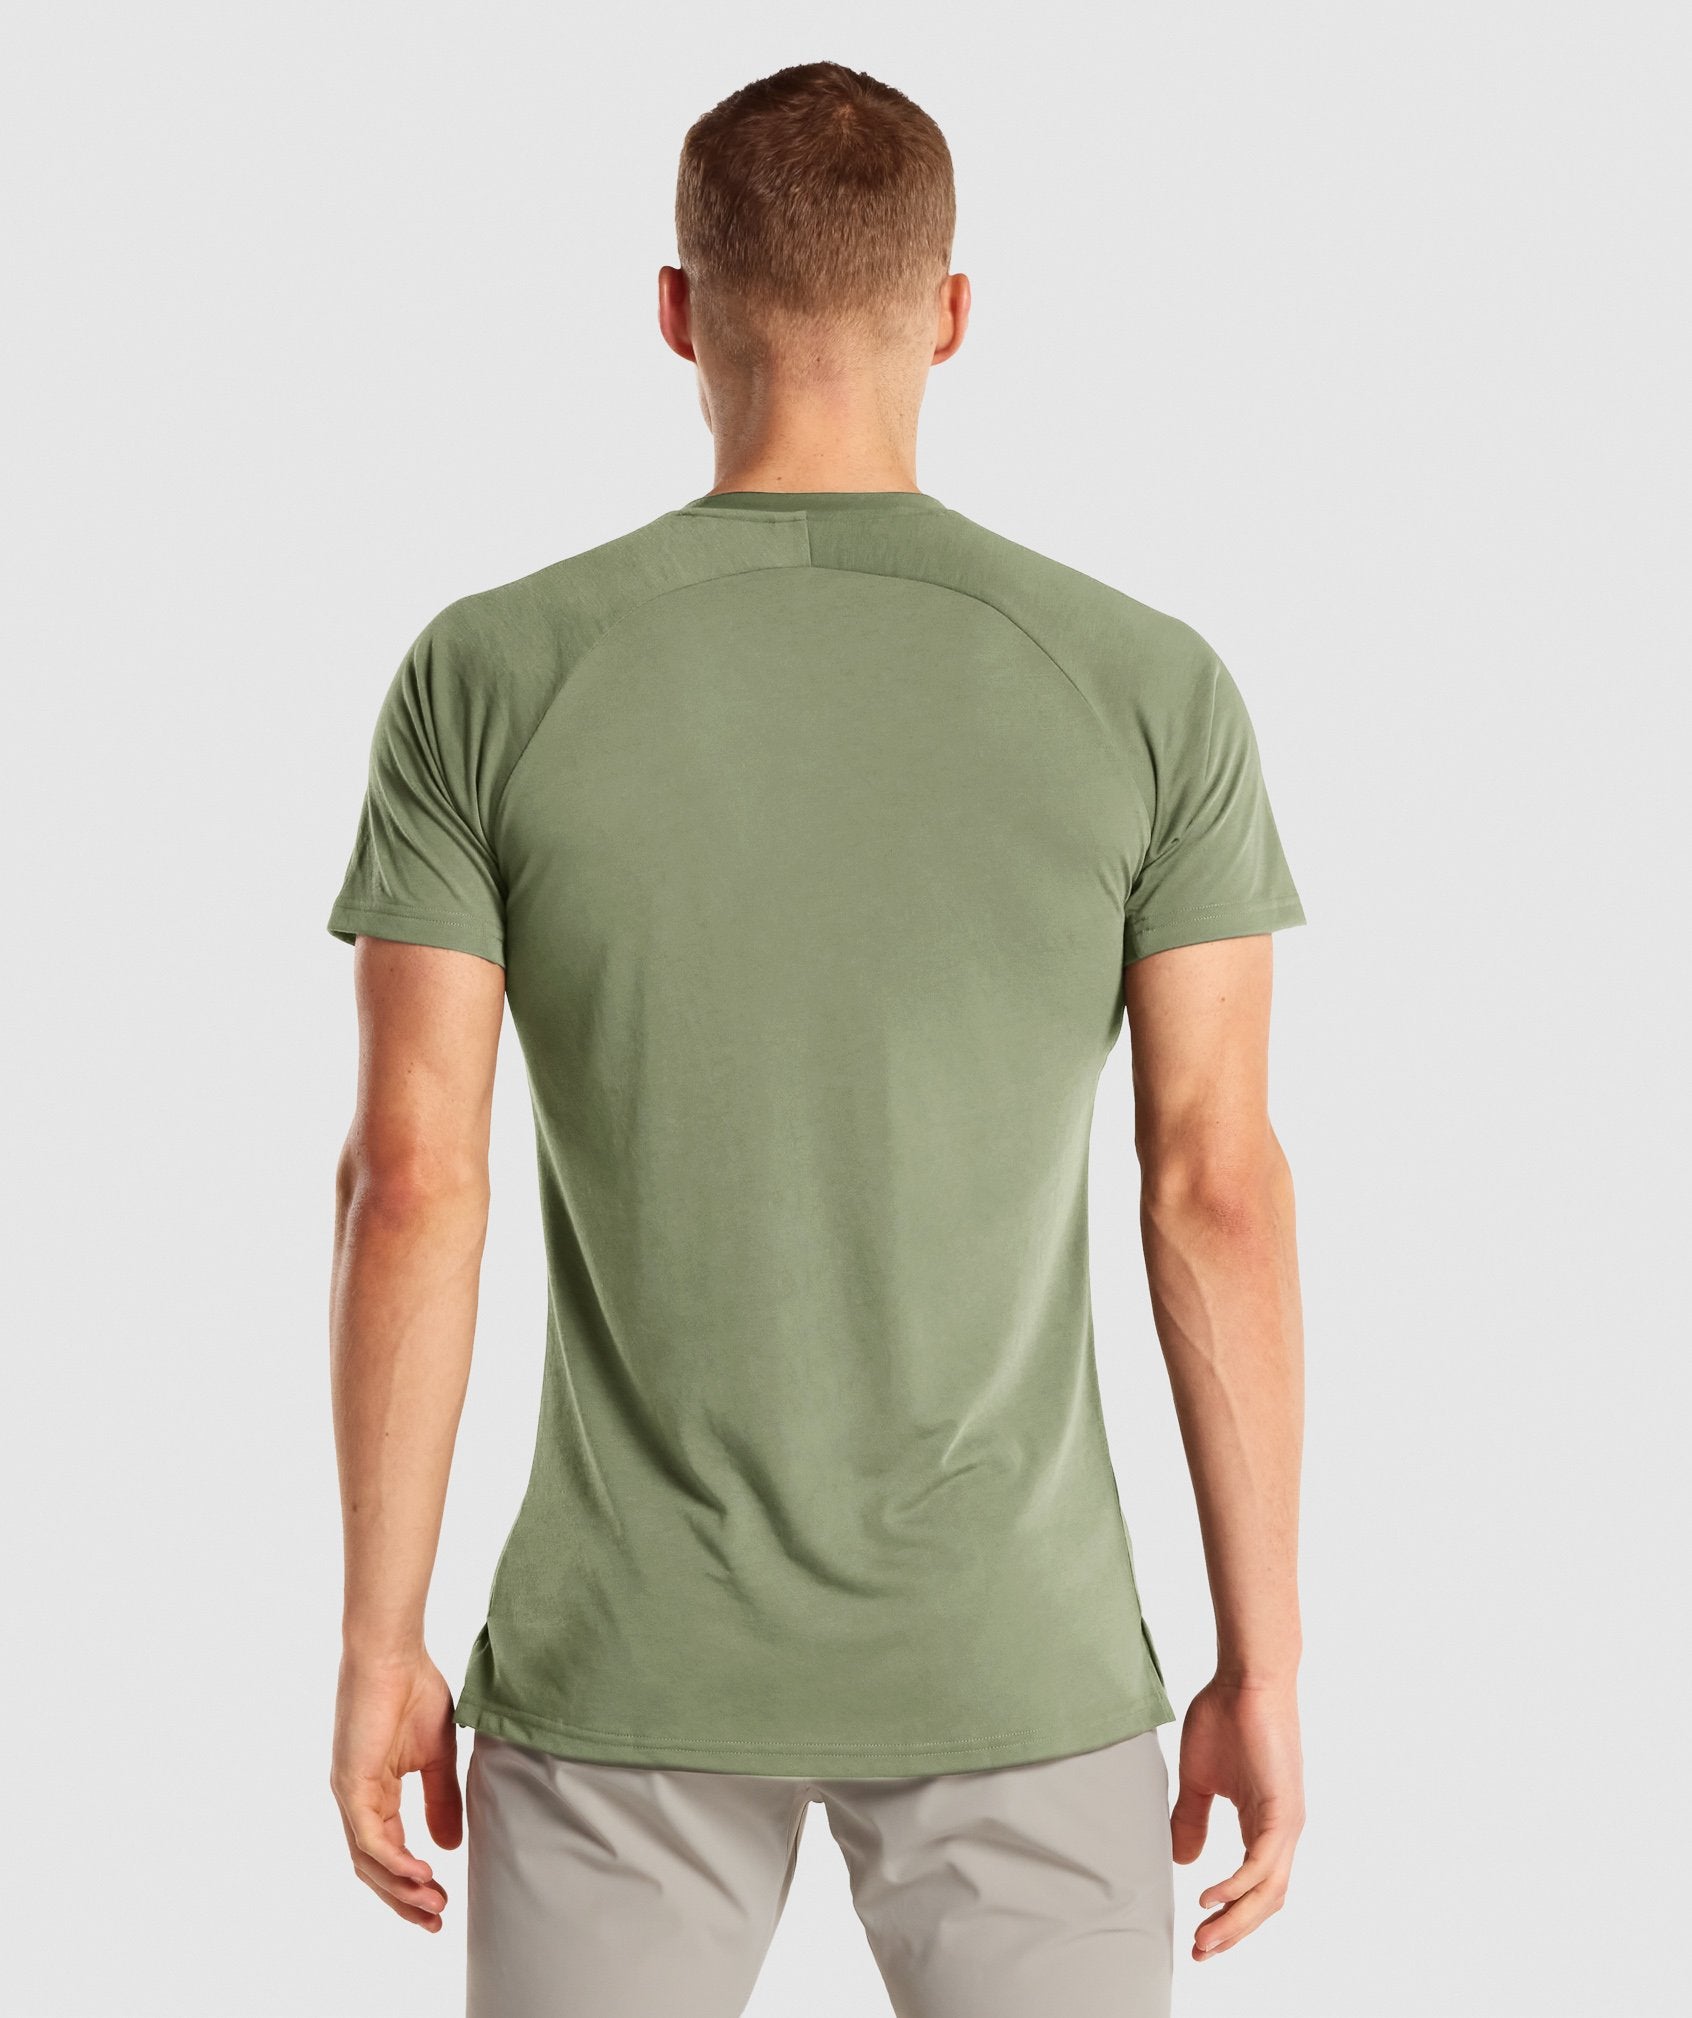 Studio T-Shirt in Green - view 3